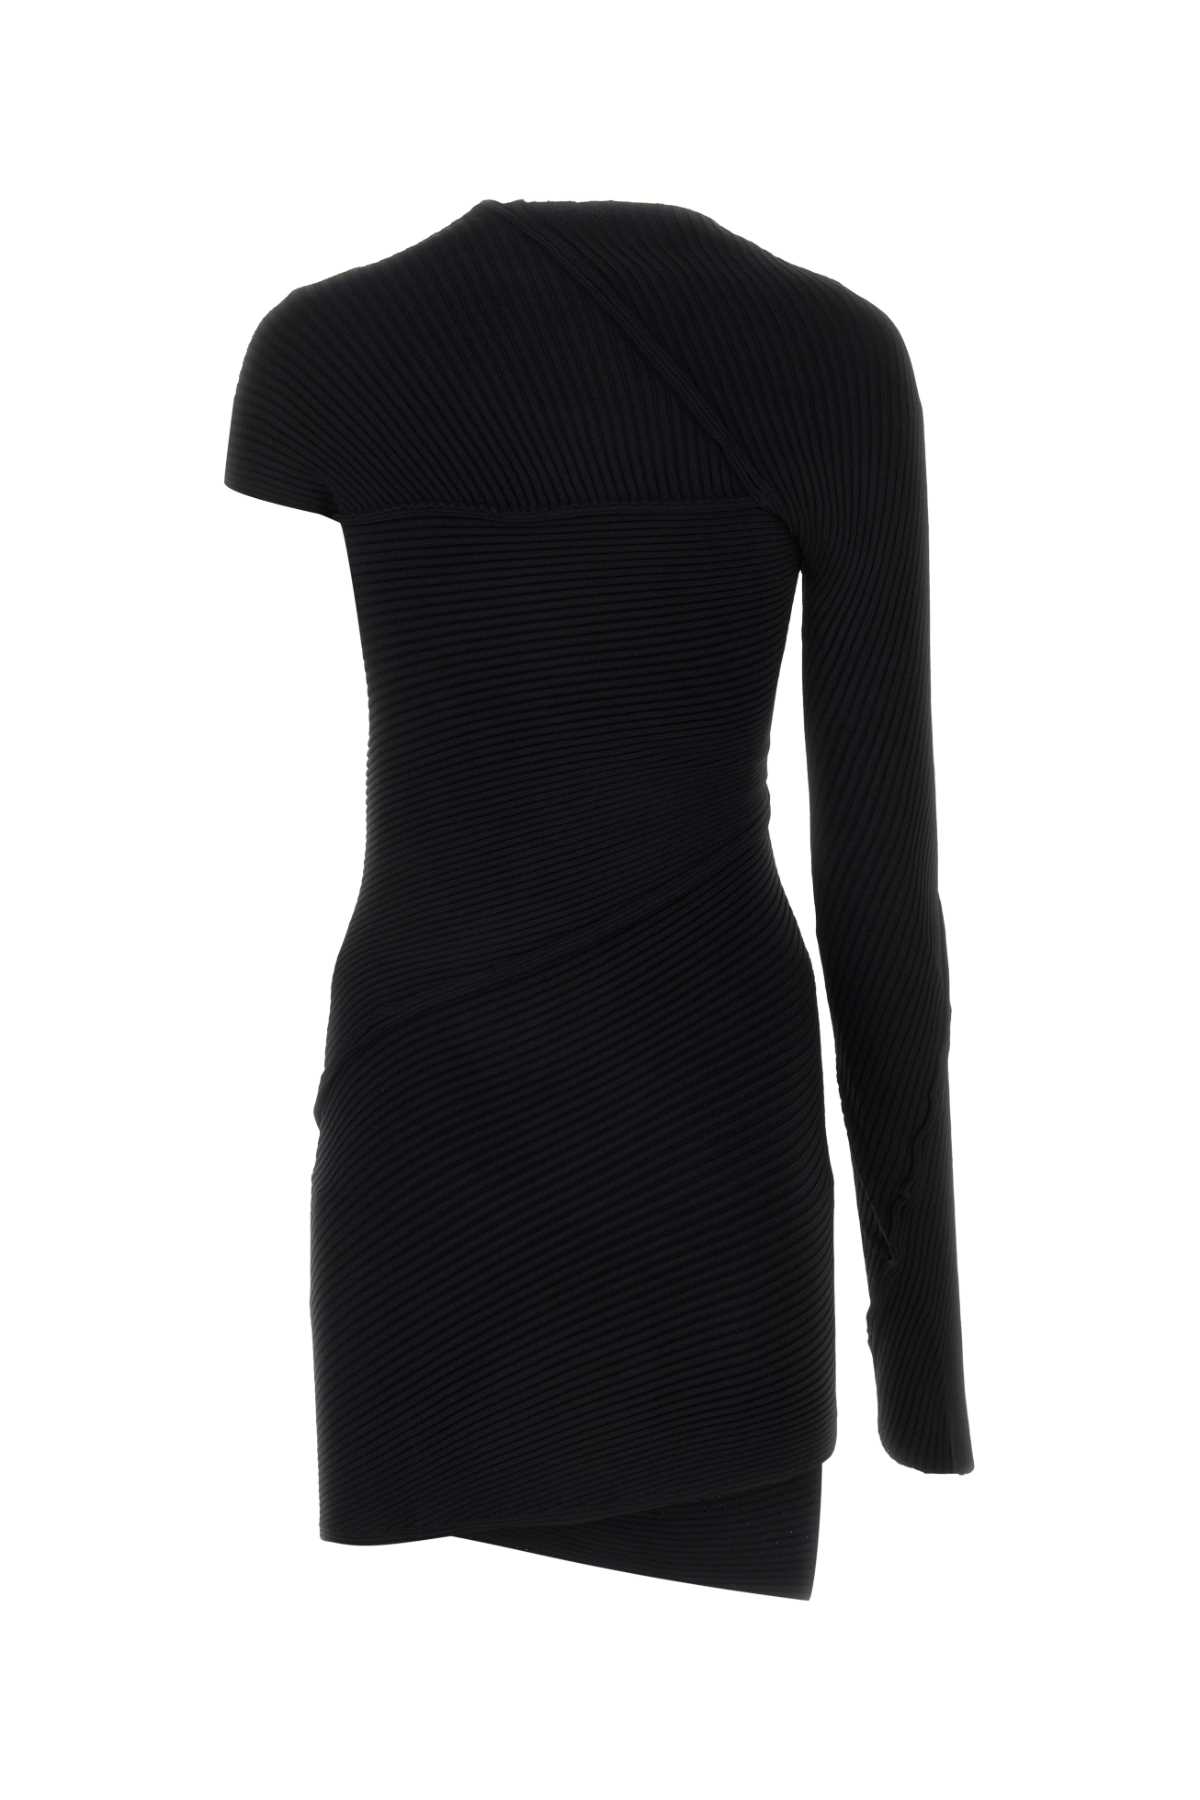 Balenciaga Black Viscose Blend Dress In 1000